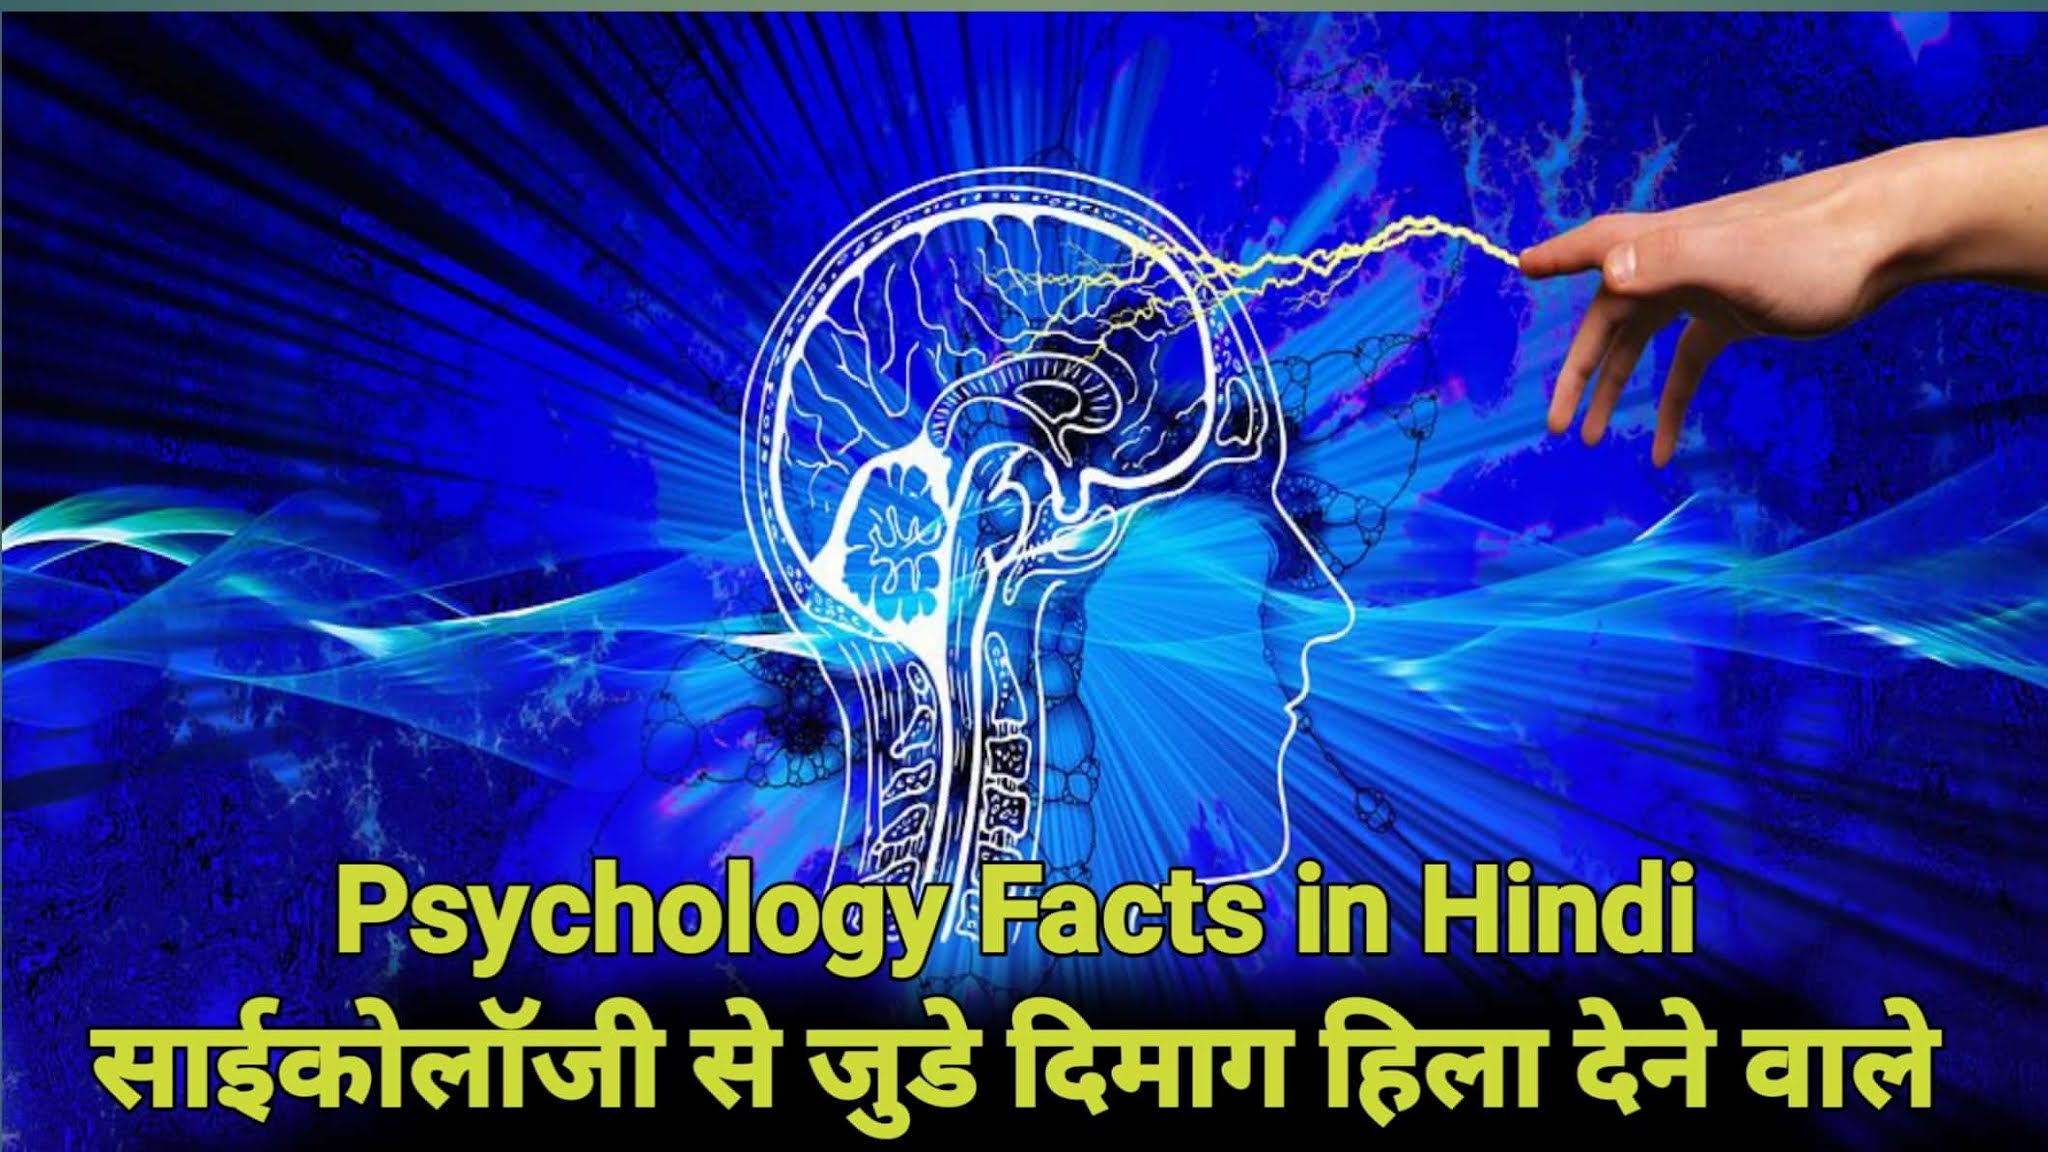 Amazing Facts about Human Psychology